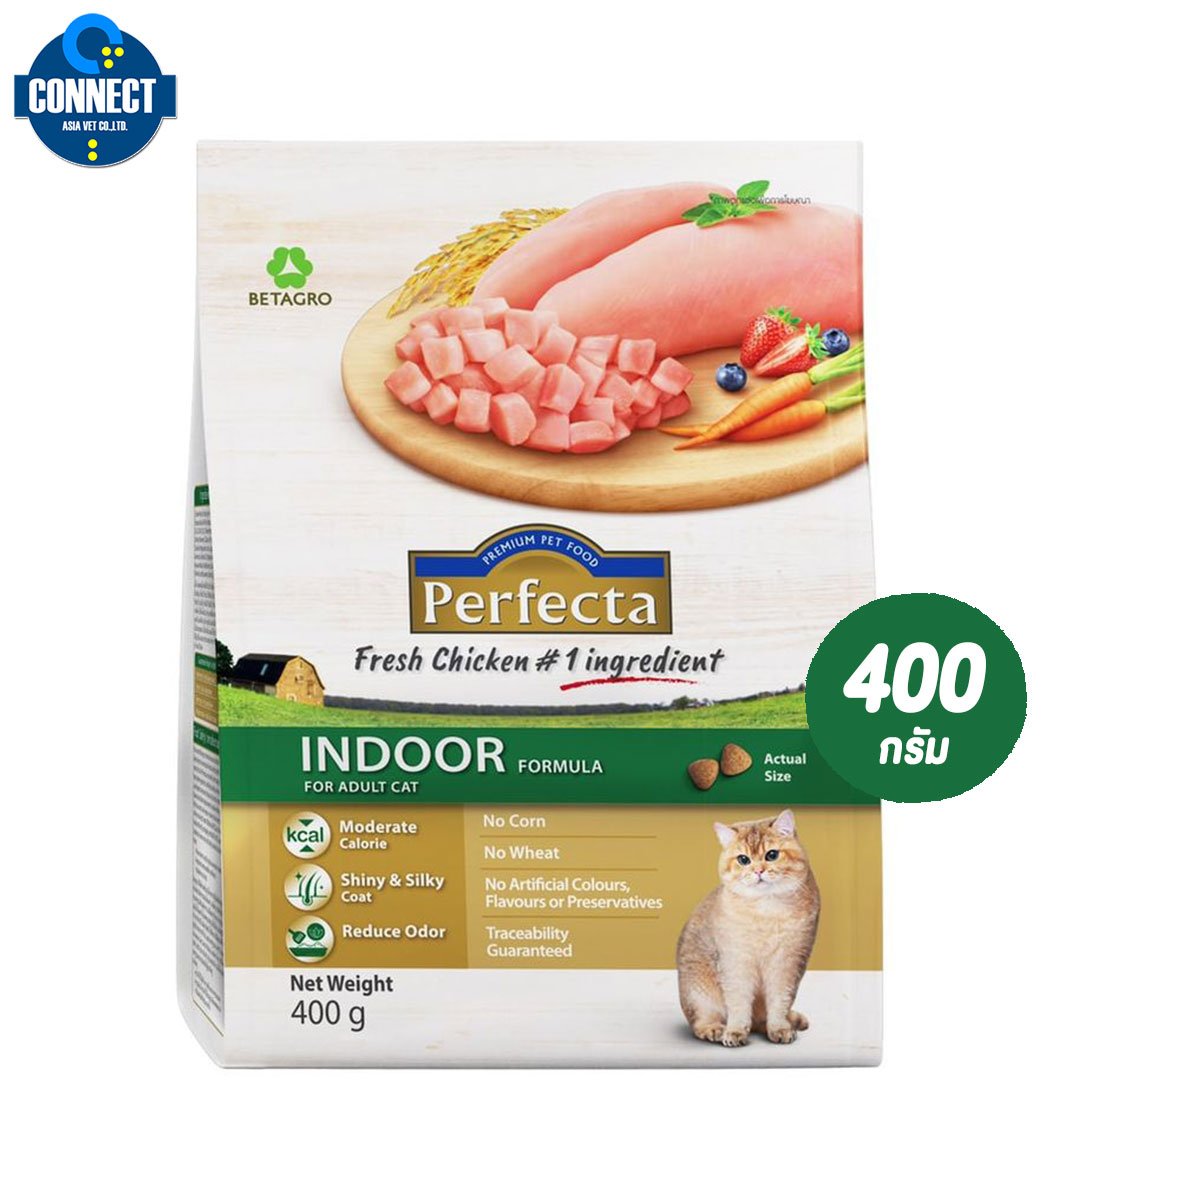 Perfecta Cat Food Adult indoor (400 g) เพอร์เฟคต้า อาหารสำหรับแมวโต เลี้ยงในบ้าน (400 ก.)